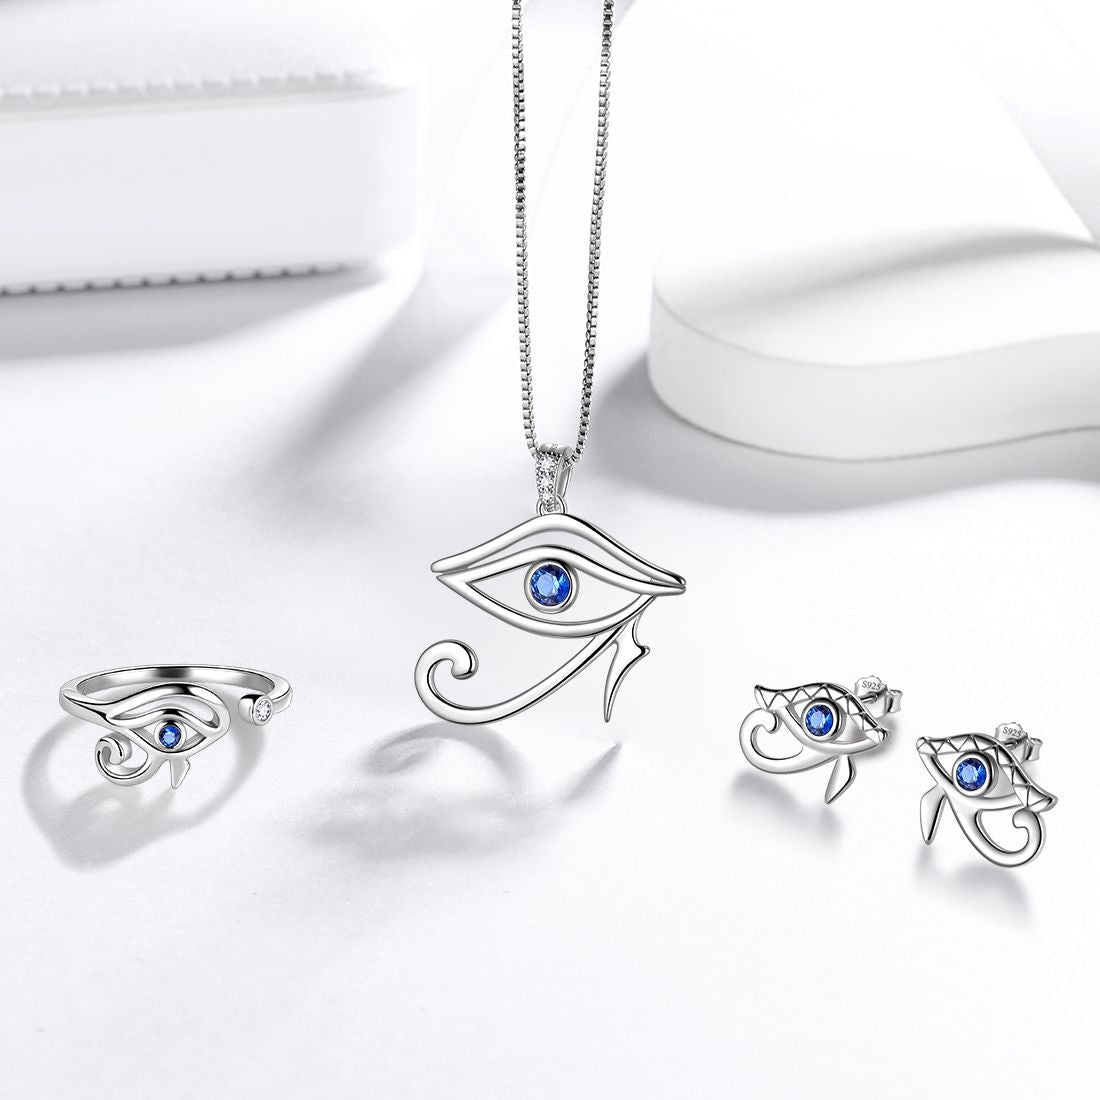 Egyptian Eye of Horus Jewelry Sets 4pcs Necklace Ring Earrings - Jewelry Set - Aurora Tears Jewelry